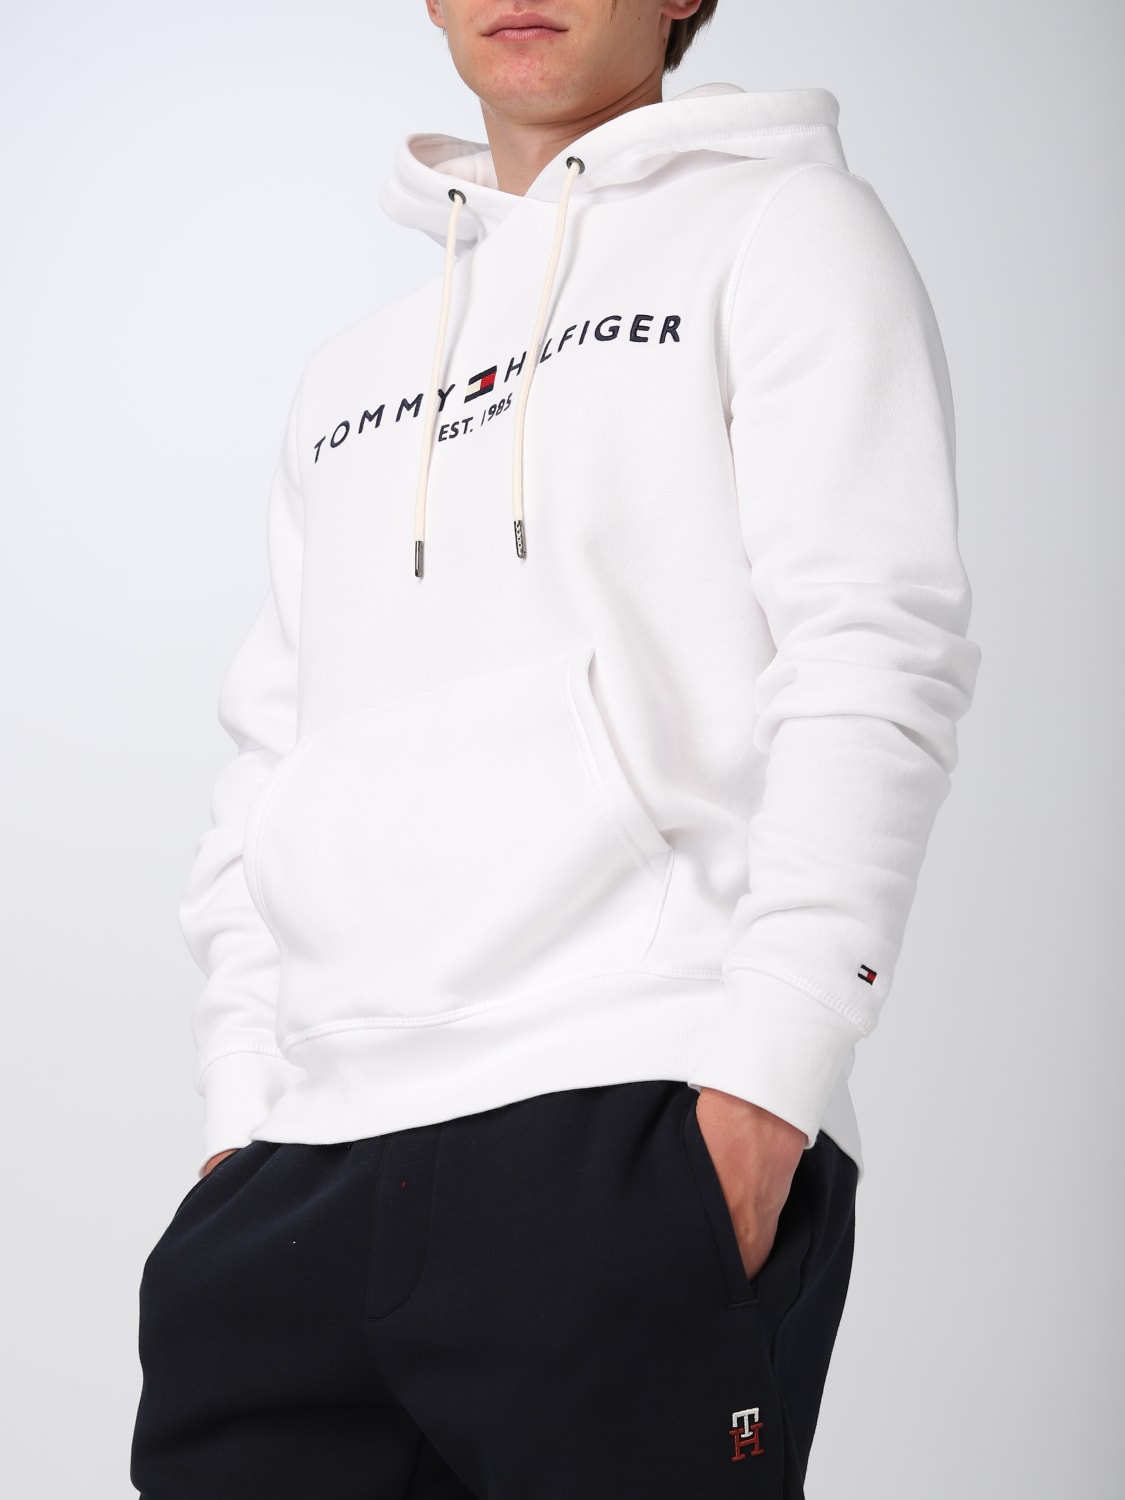 at HILFIGER: Tommy | blend sweatshirt online cotton in MW0MW11599 TOMMY - White sweatshirt Hilfiger